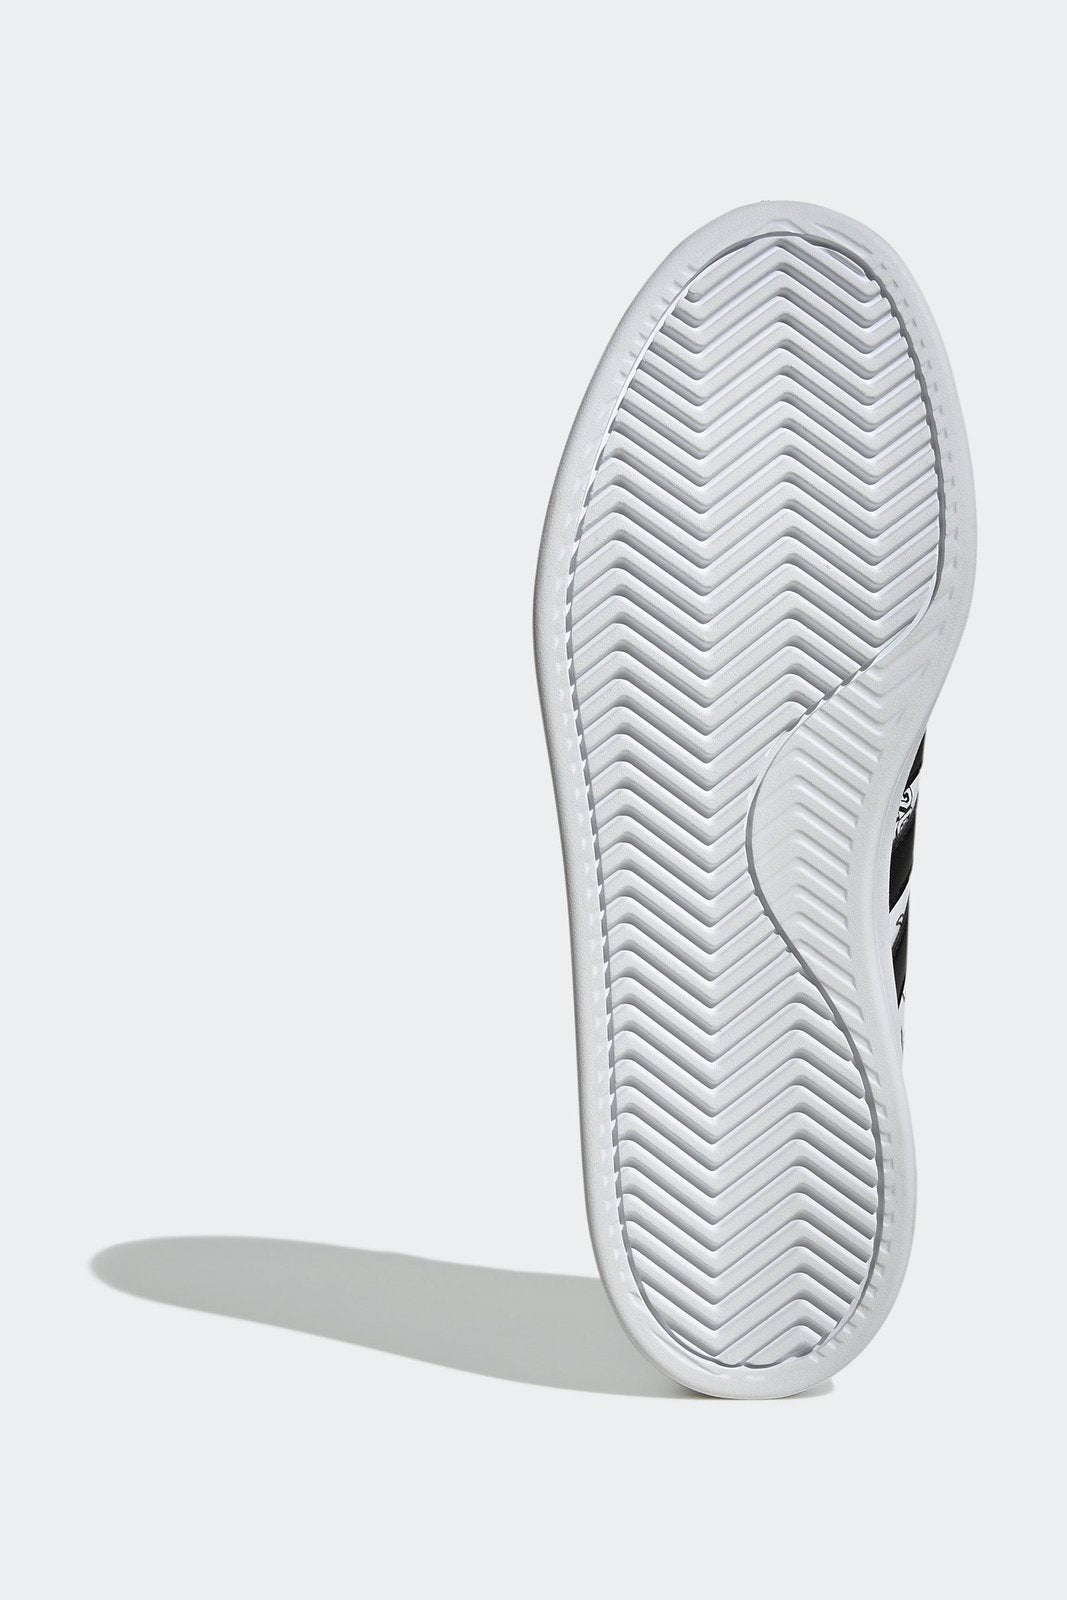 ADIDAS - סניקרס GRAND COURT בצבע לבן ושחור - MASHBIR//365